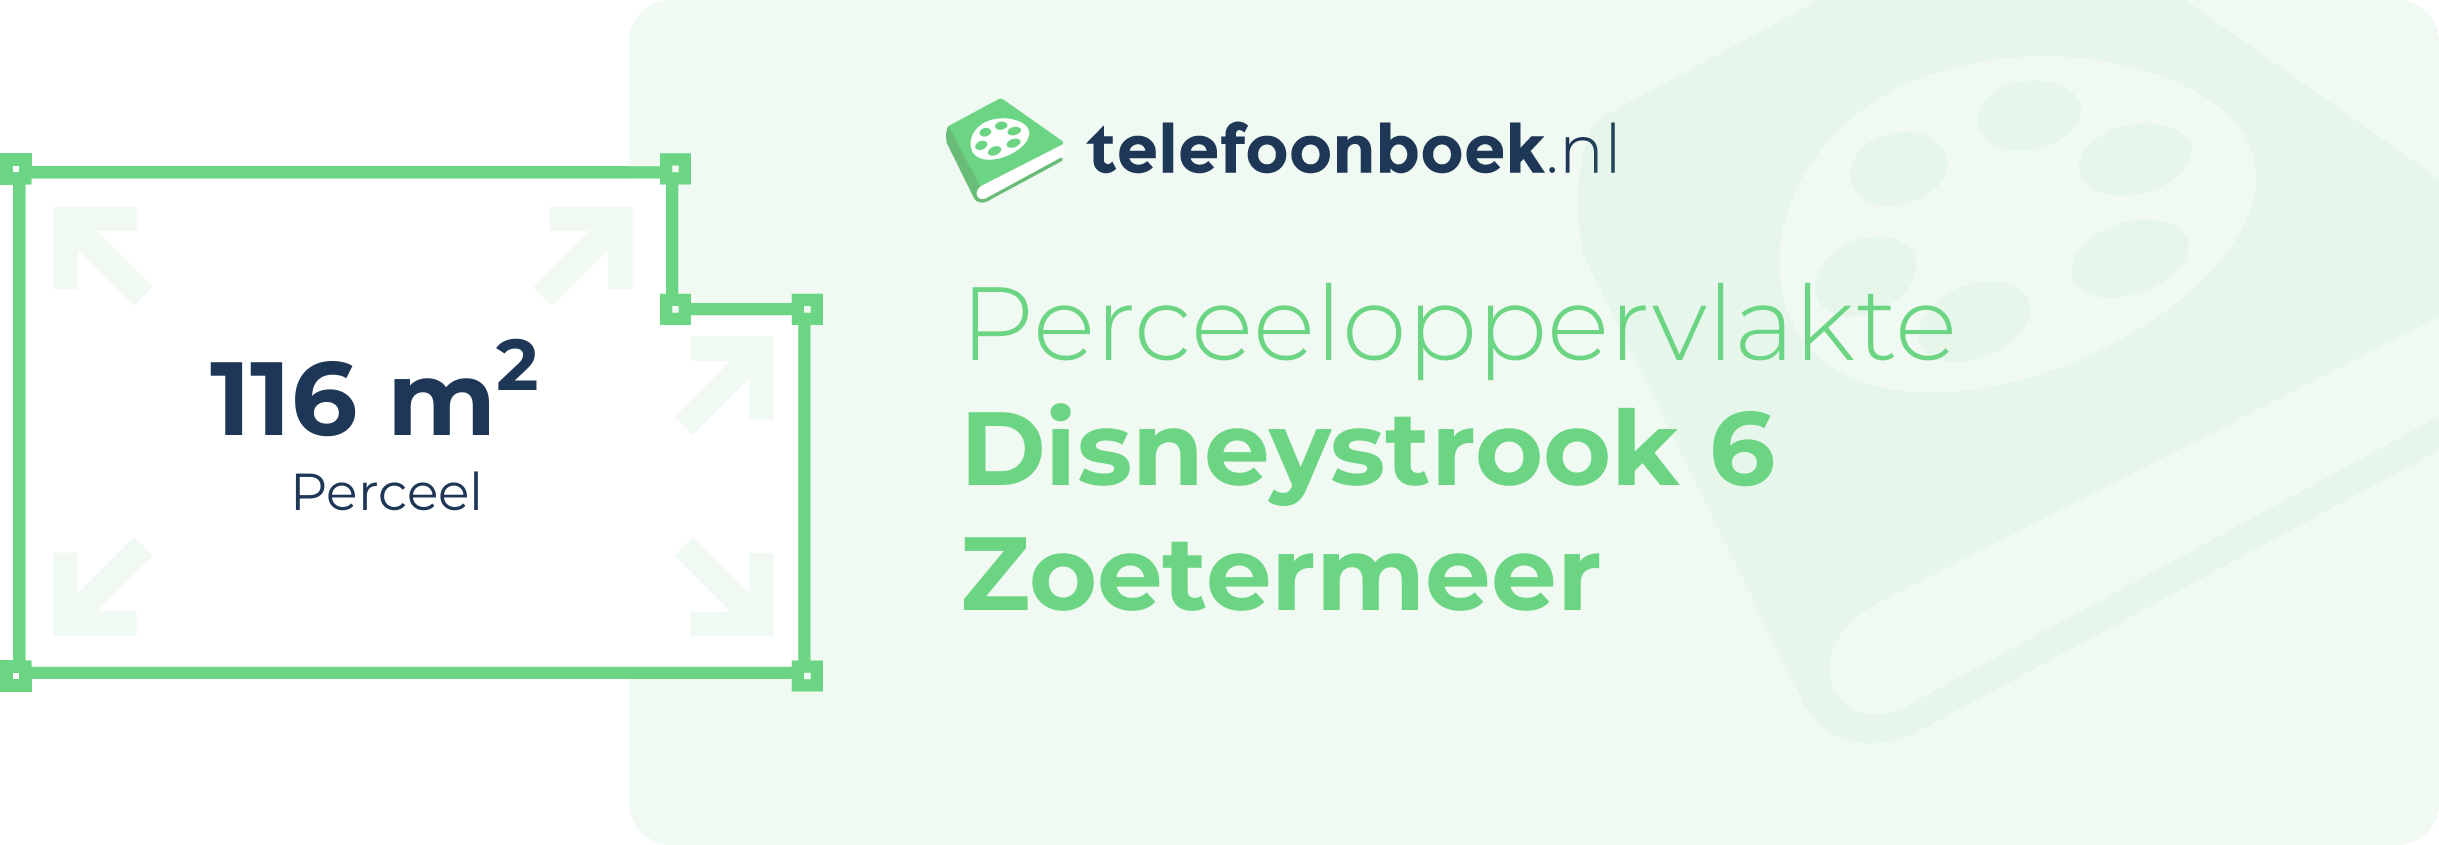 Perceeloppervlakte Disneystrook 6 Zoetermeer